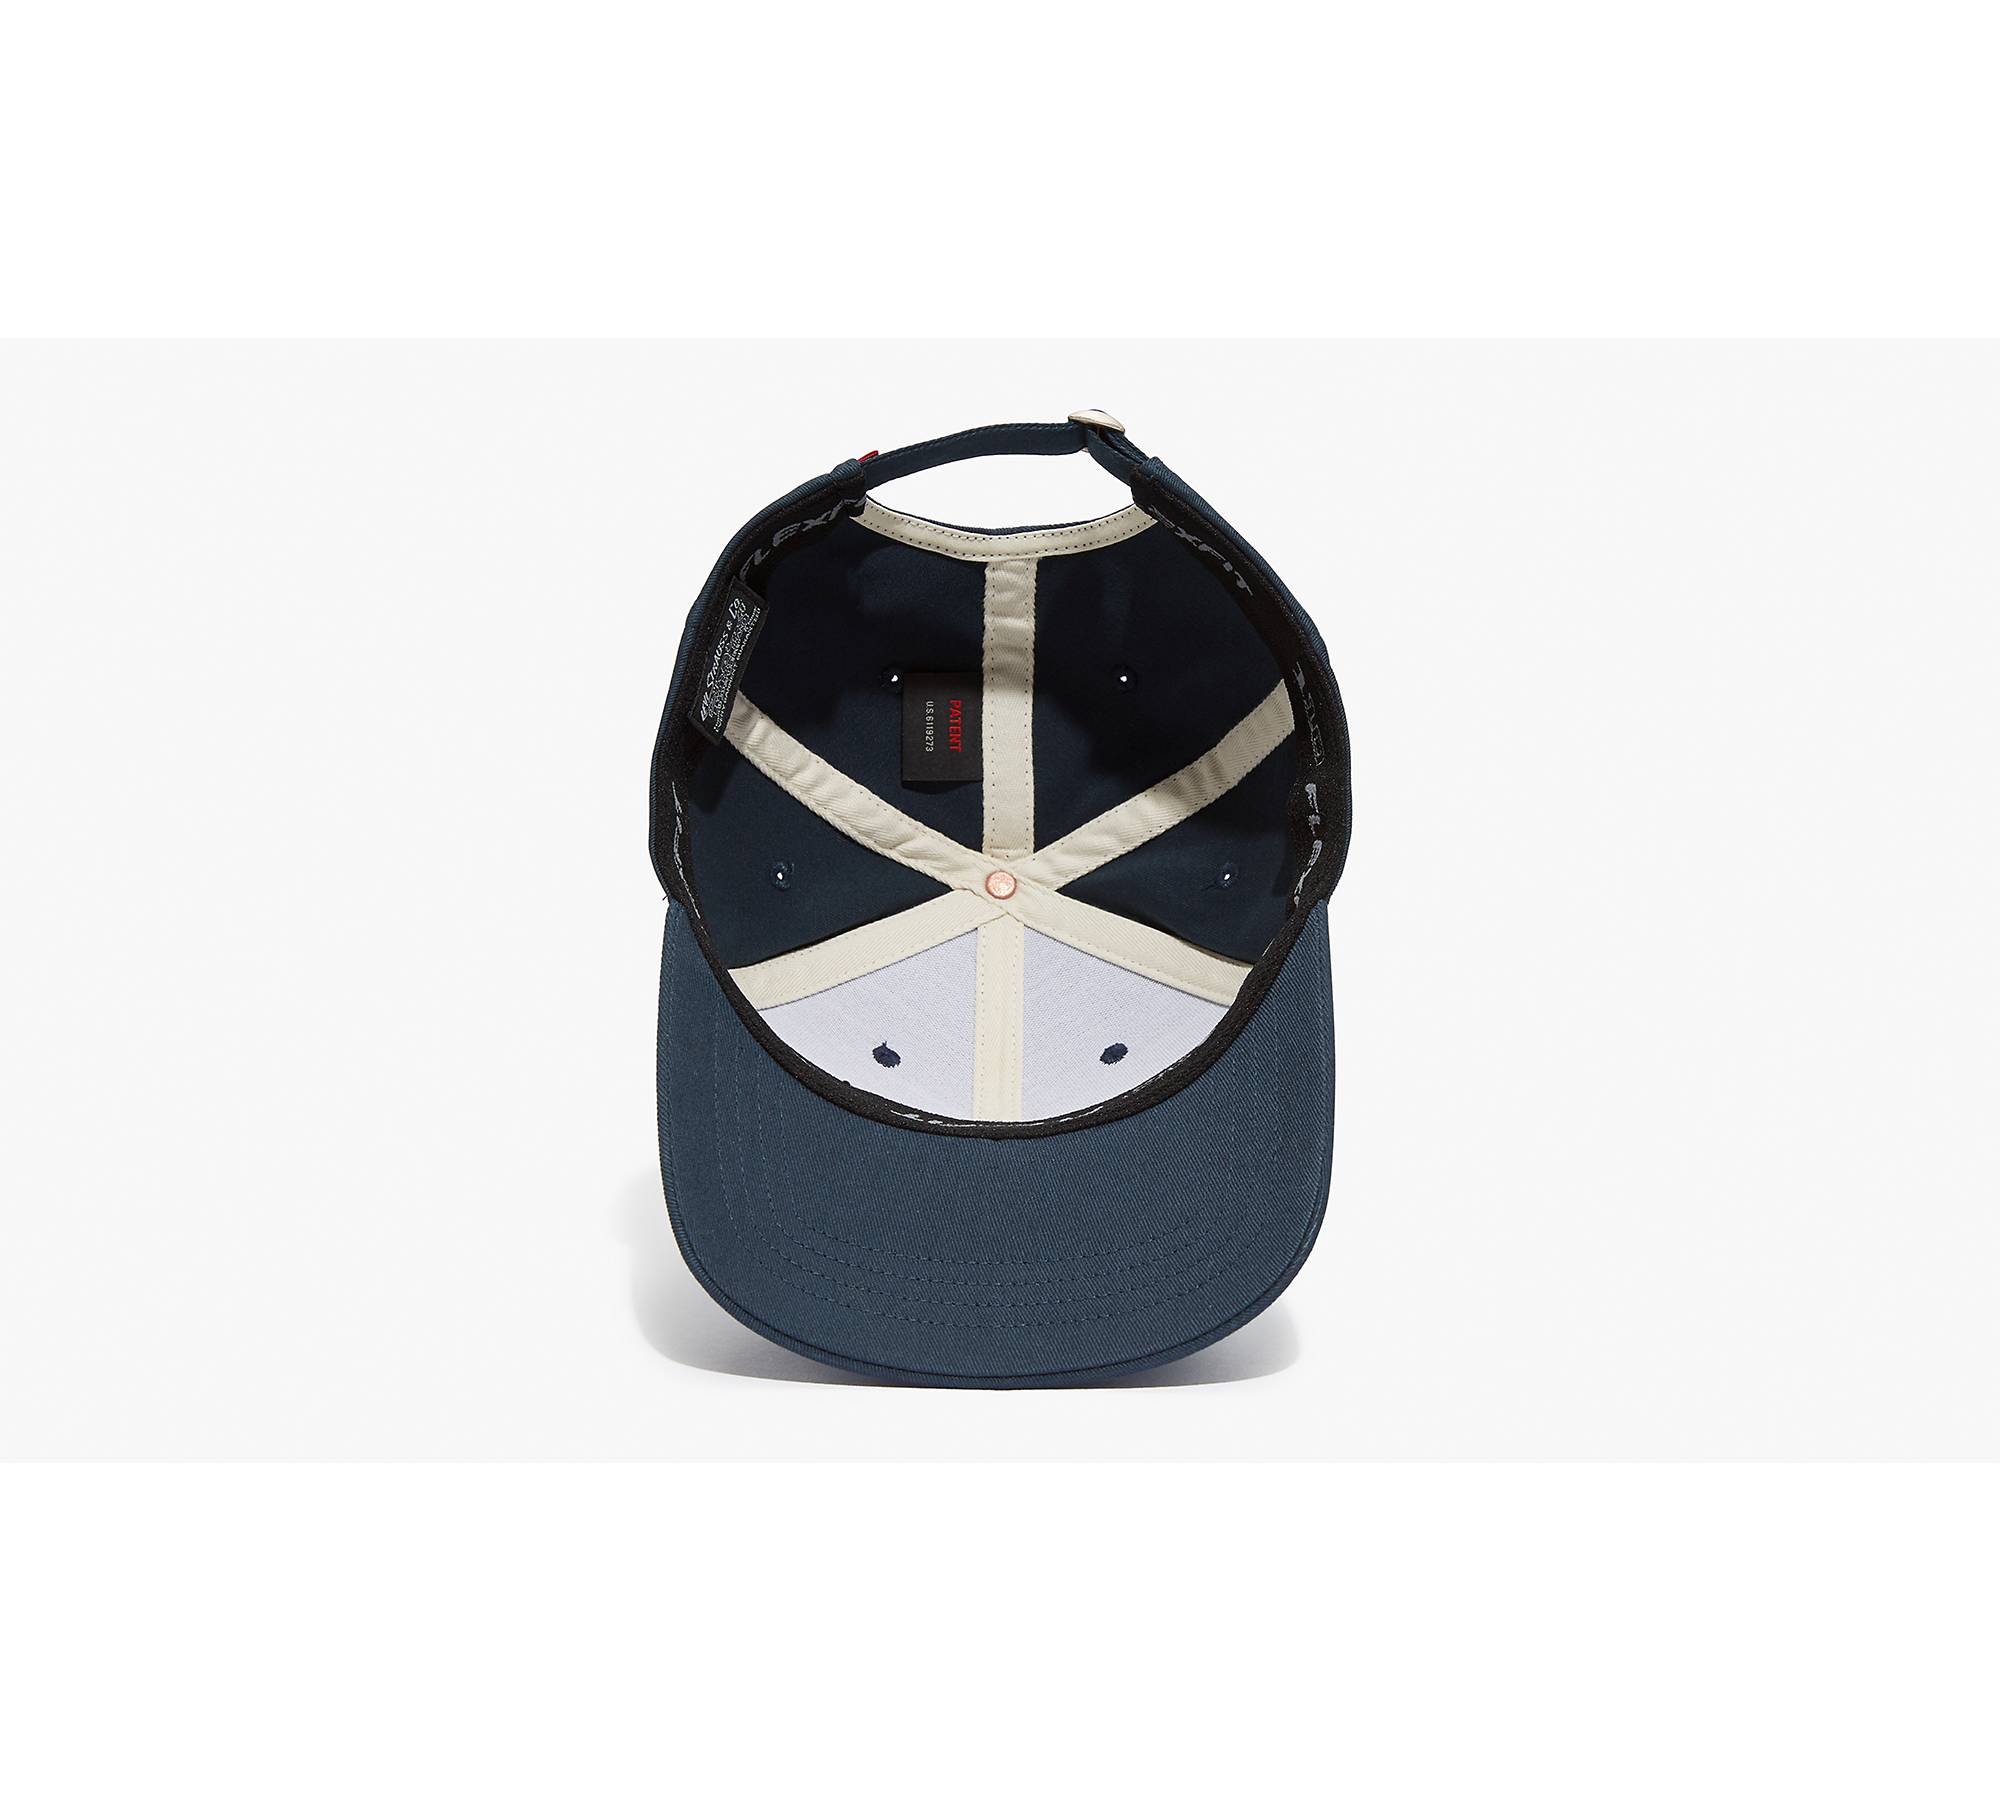 Levi's® Logo Flex Fit Baseball Hat - Blue